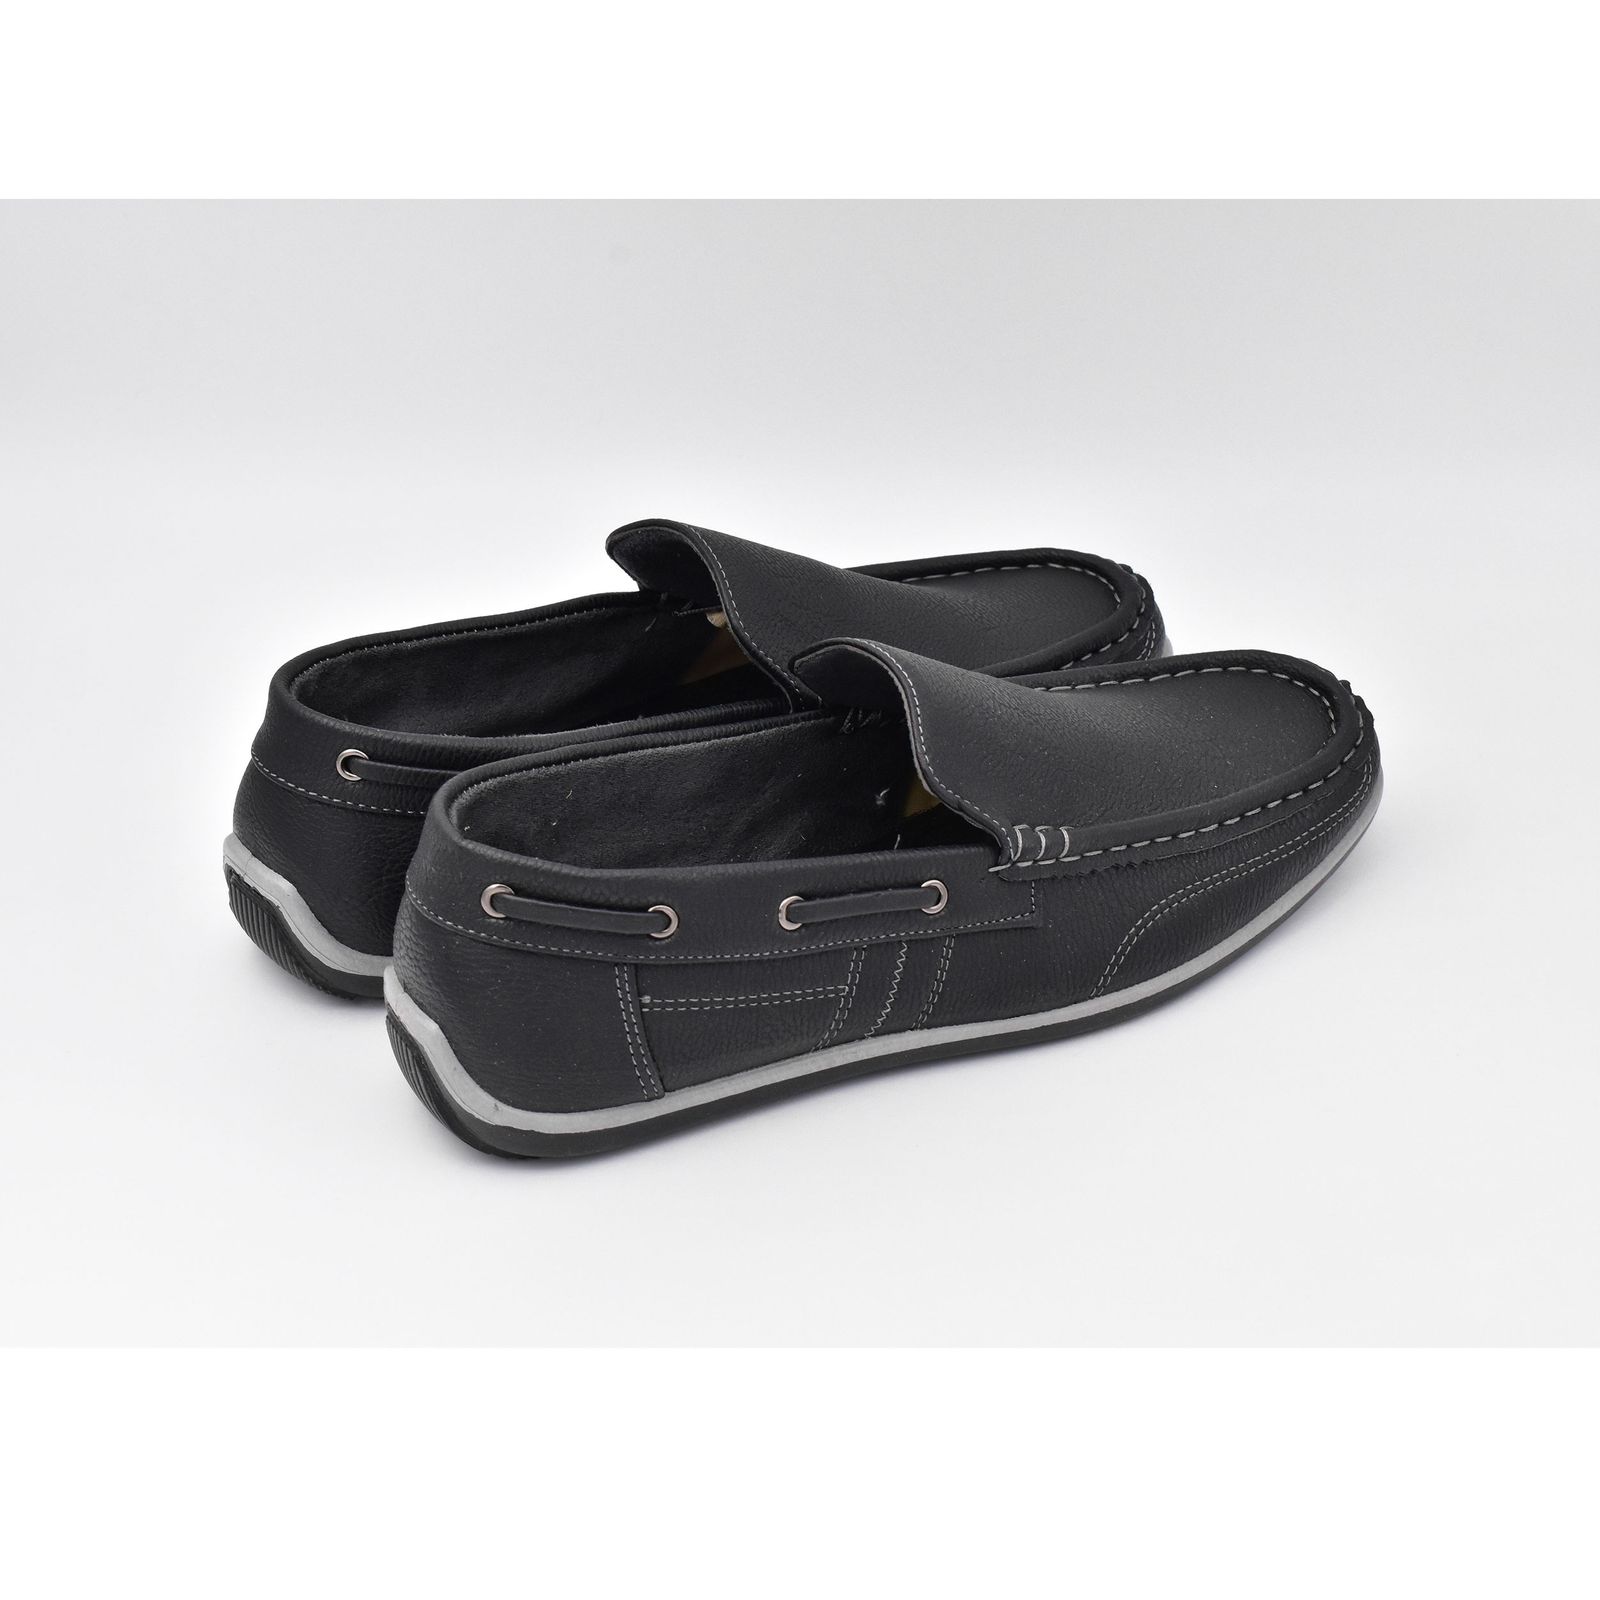 کفش روزمره مردانه پاما مدل K52 کد G1211 -  - 6